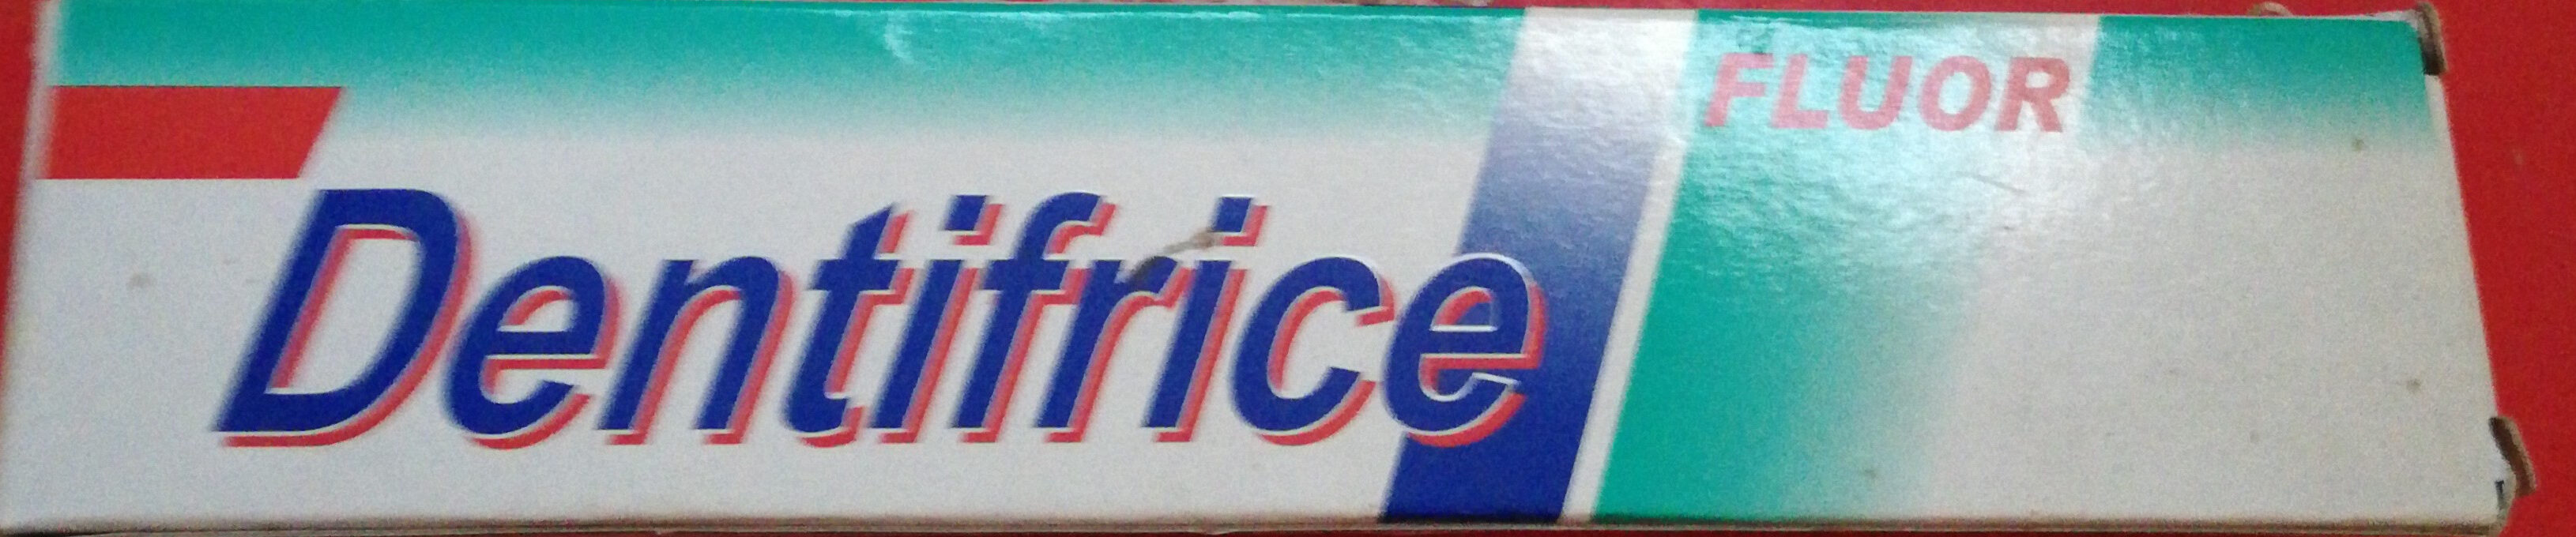 Dentifrice - Produit - fr